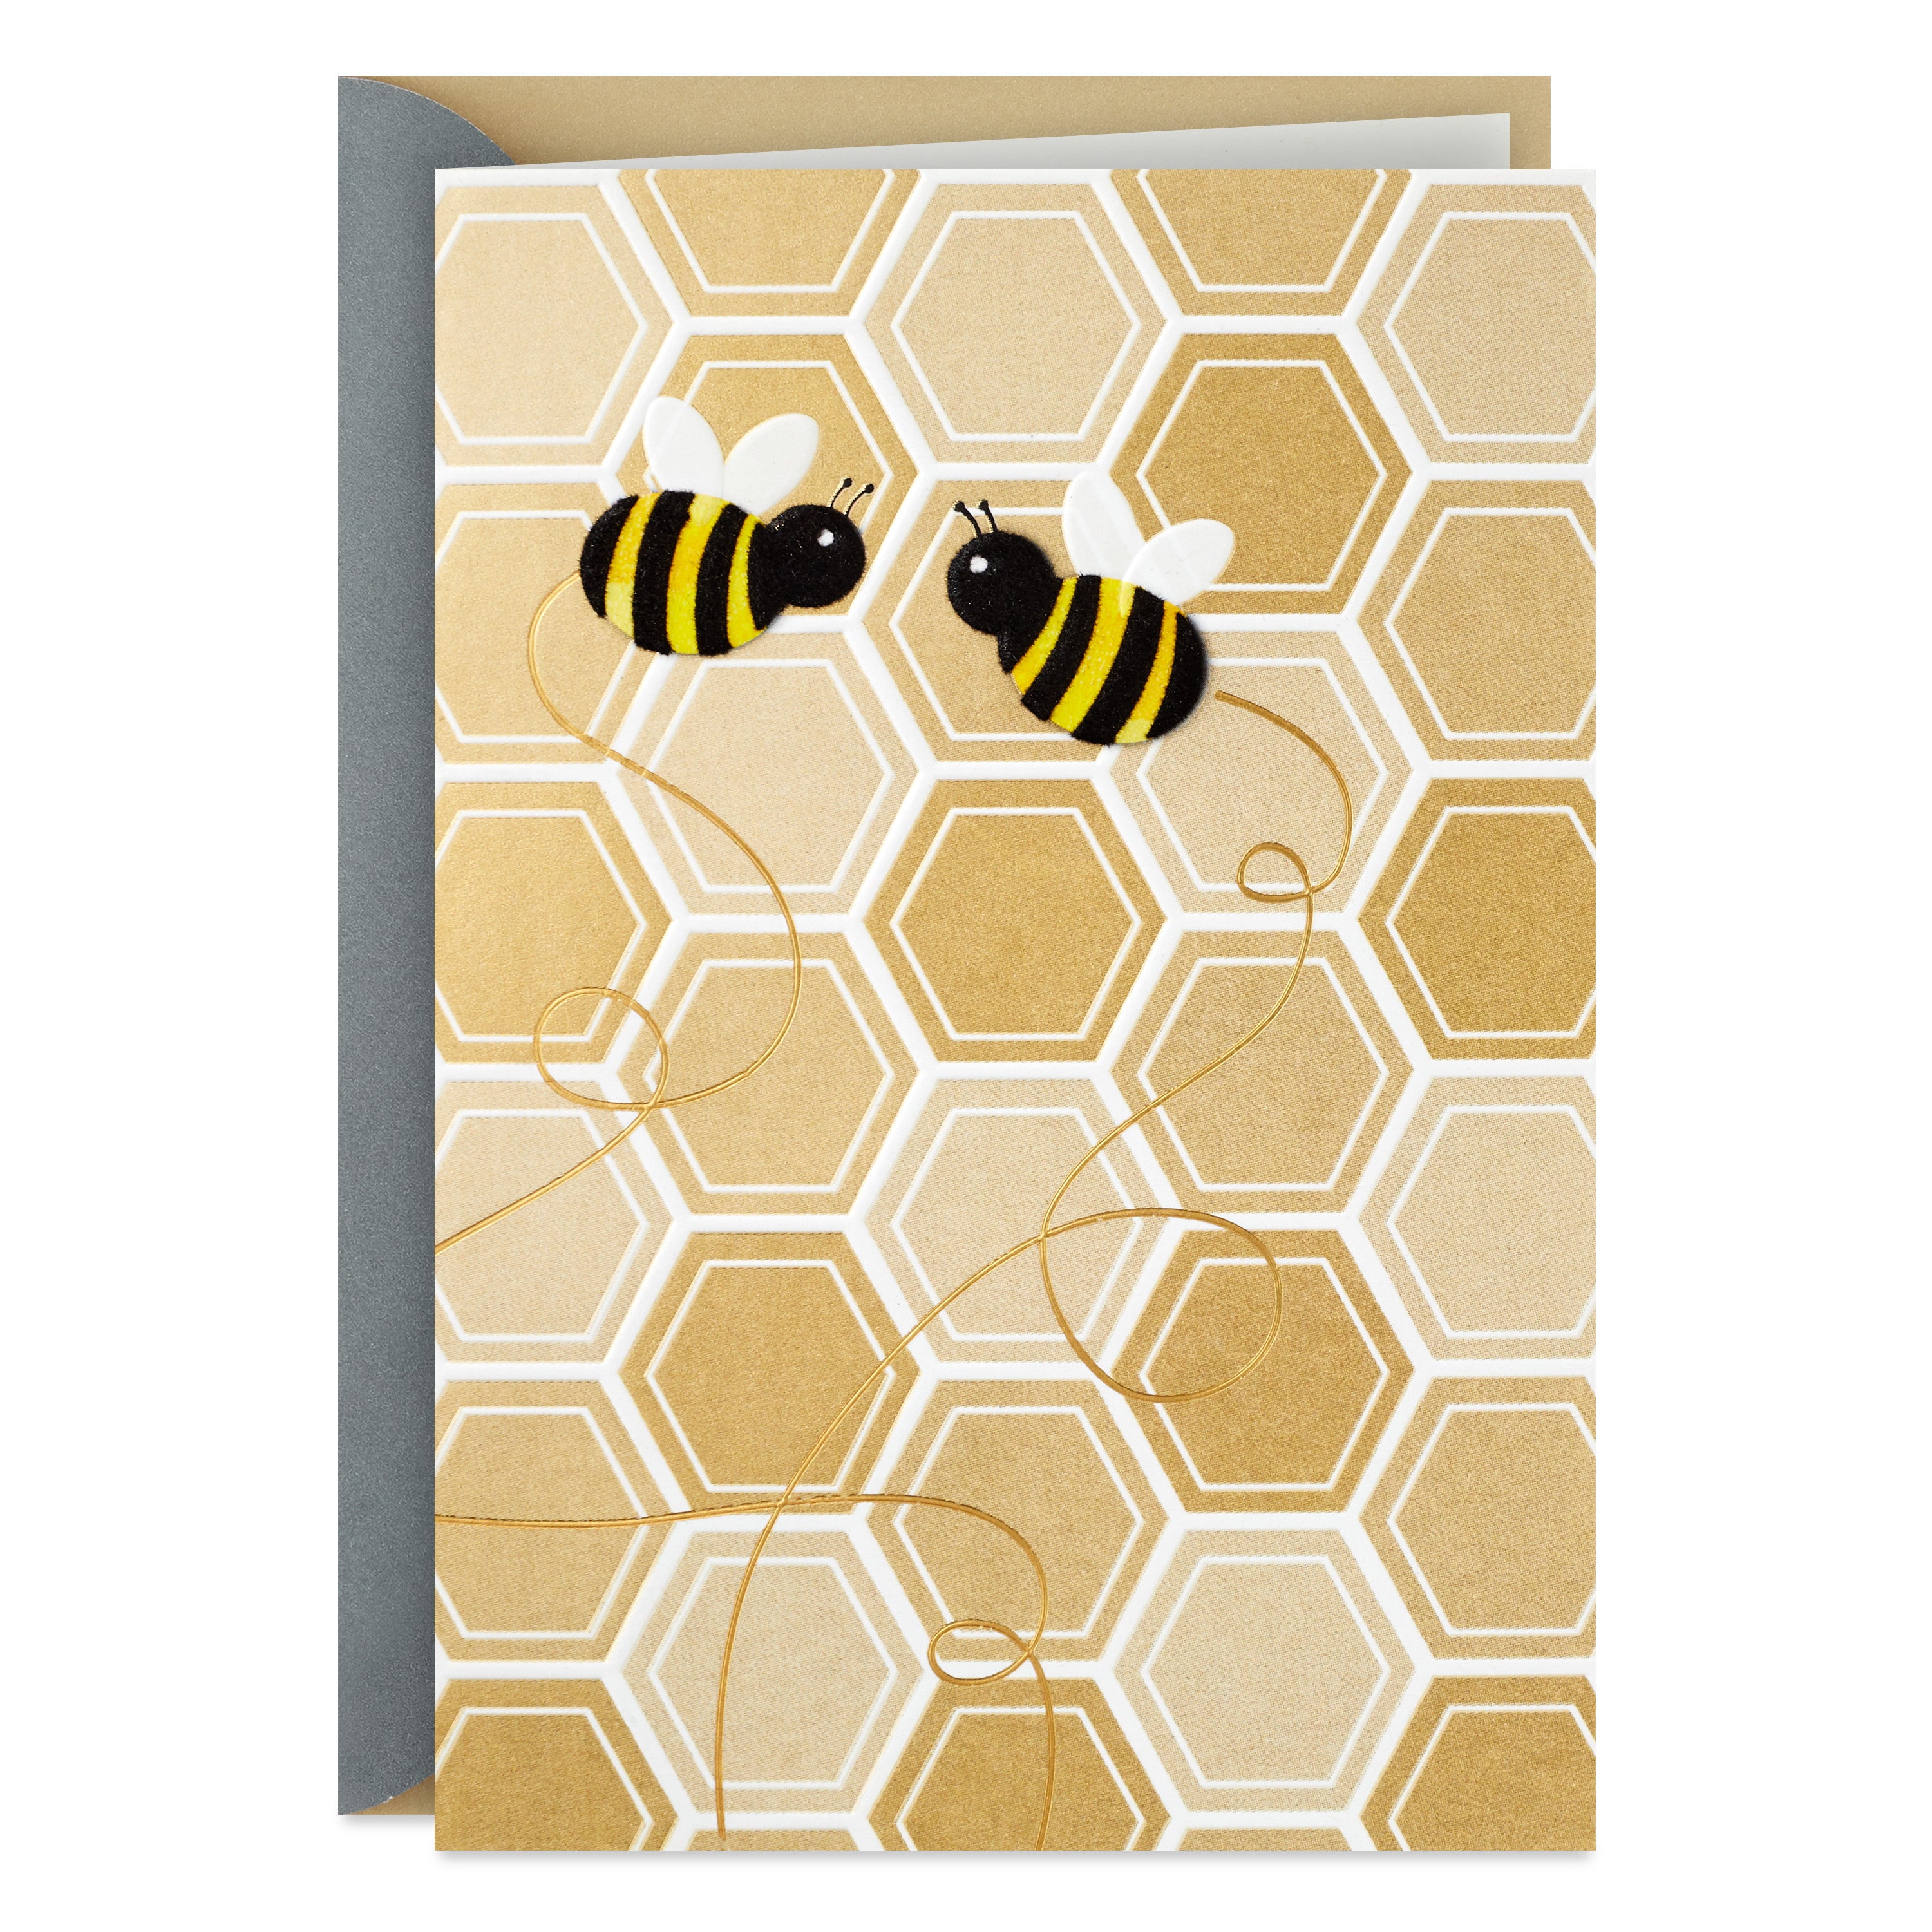 Hallmark Anniversary Card, Love Card, Romantic Birthday Card (Honeybees)